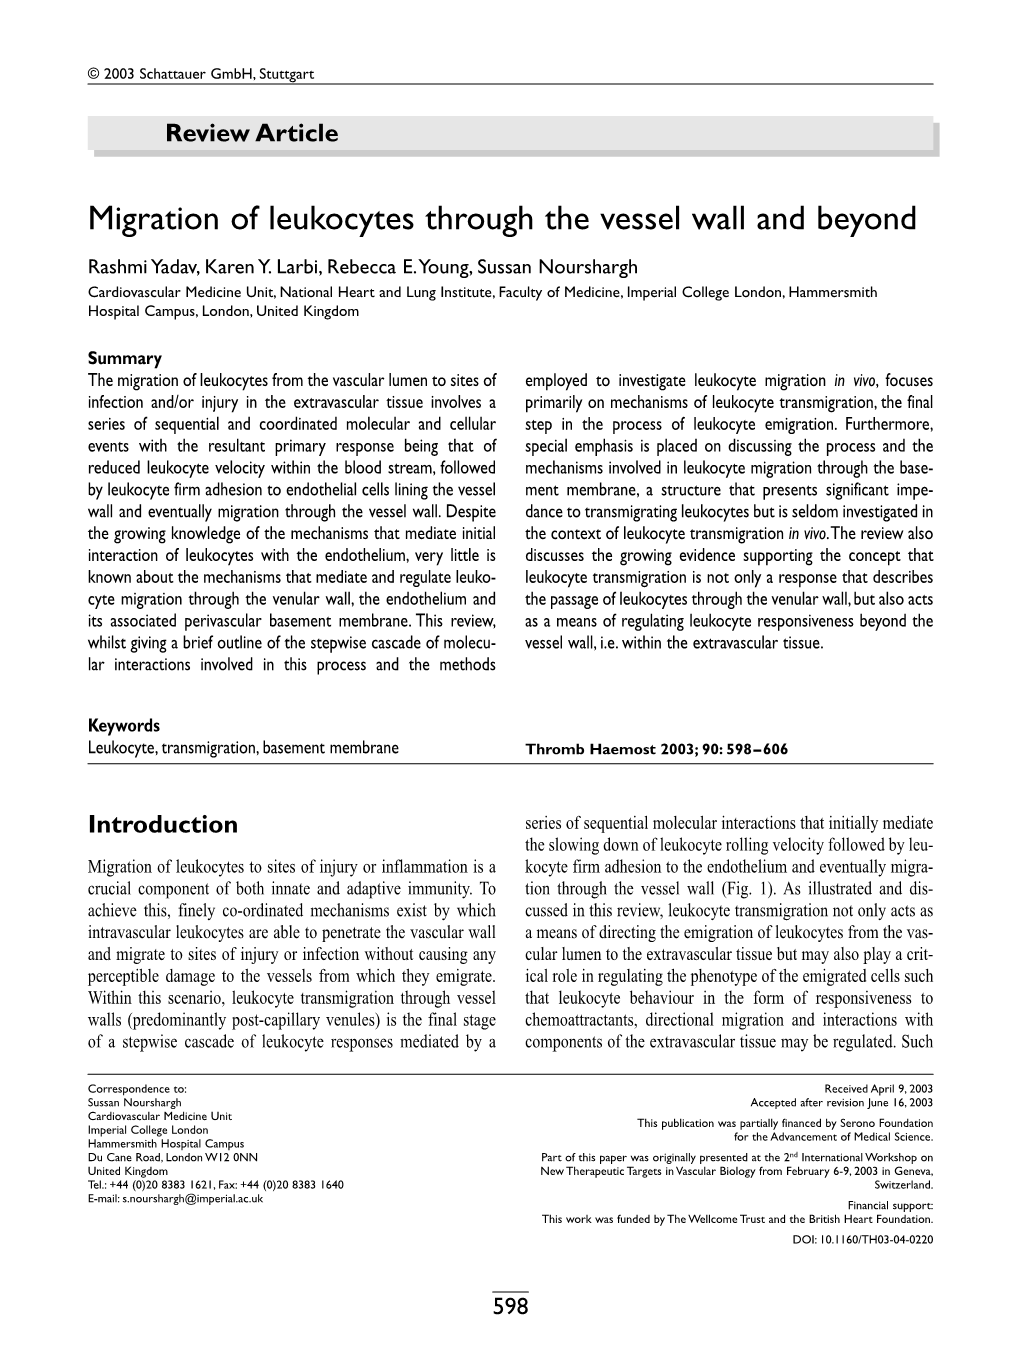 Migration of Leukocytes Through the Vessel Wall and Beyond Rashmi Yadav, Karen Y